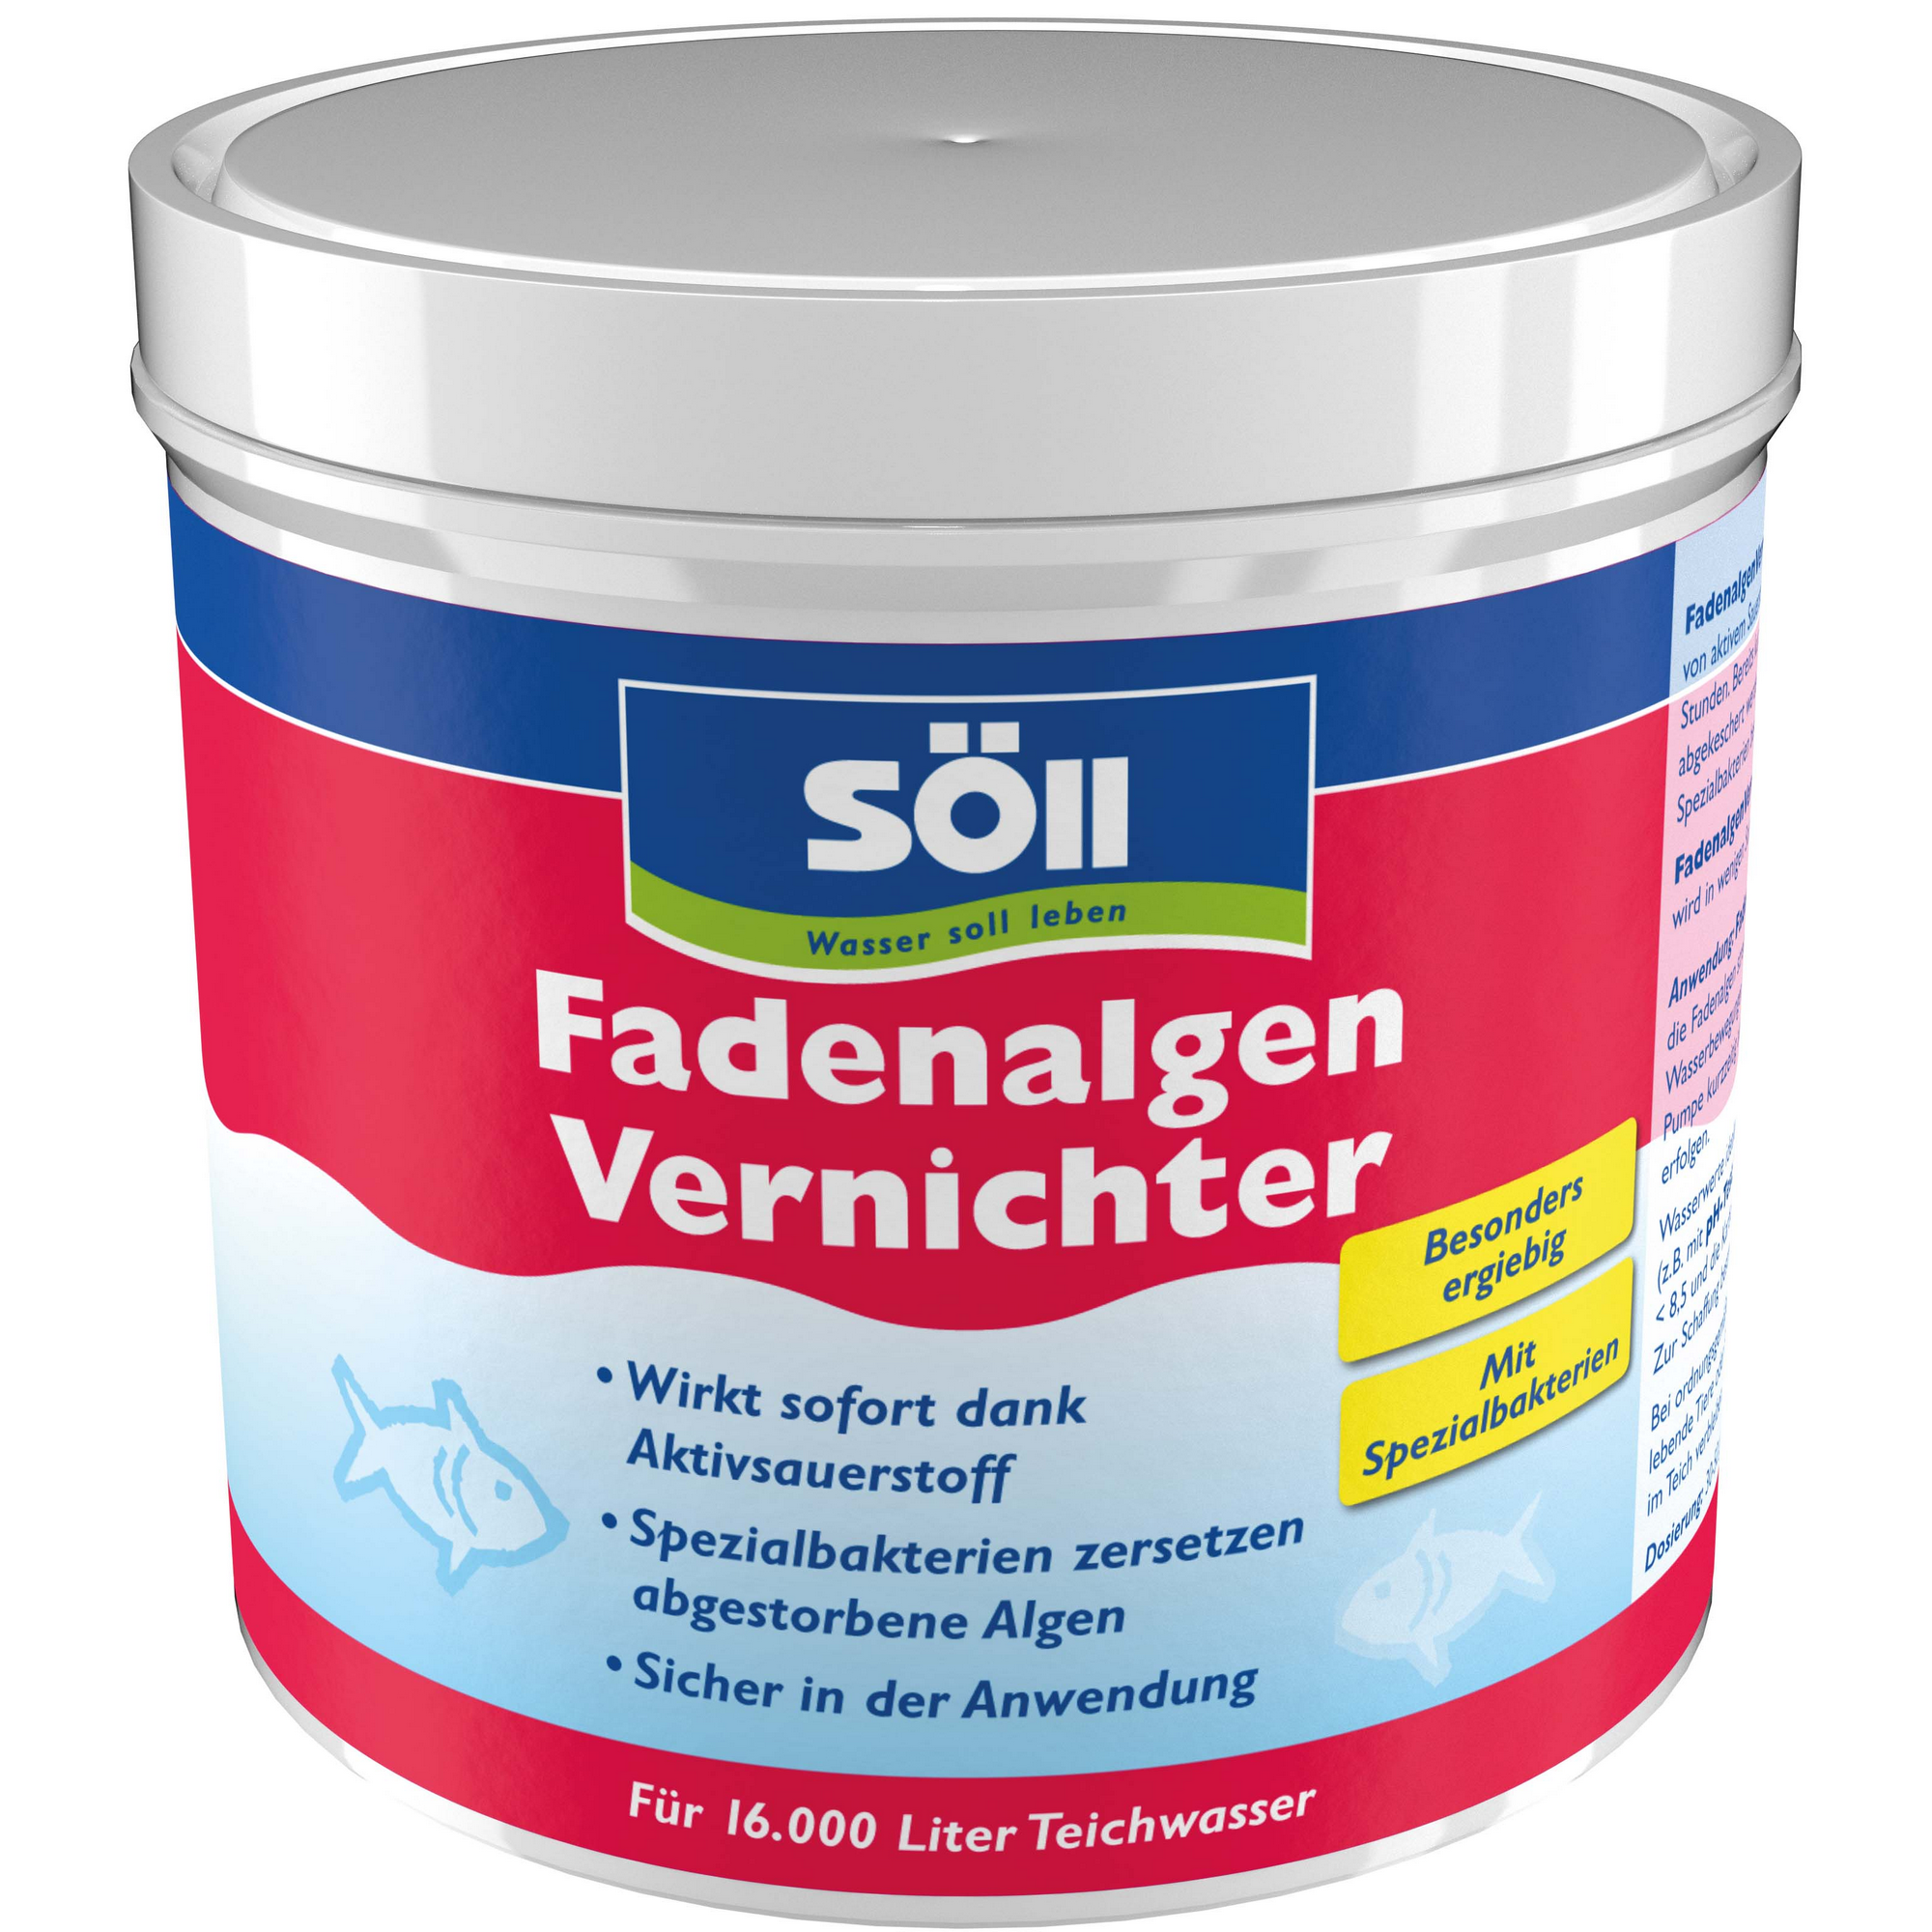 Fadenalgen-Vernichter 500 g + product picture